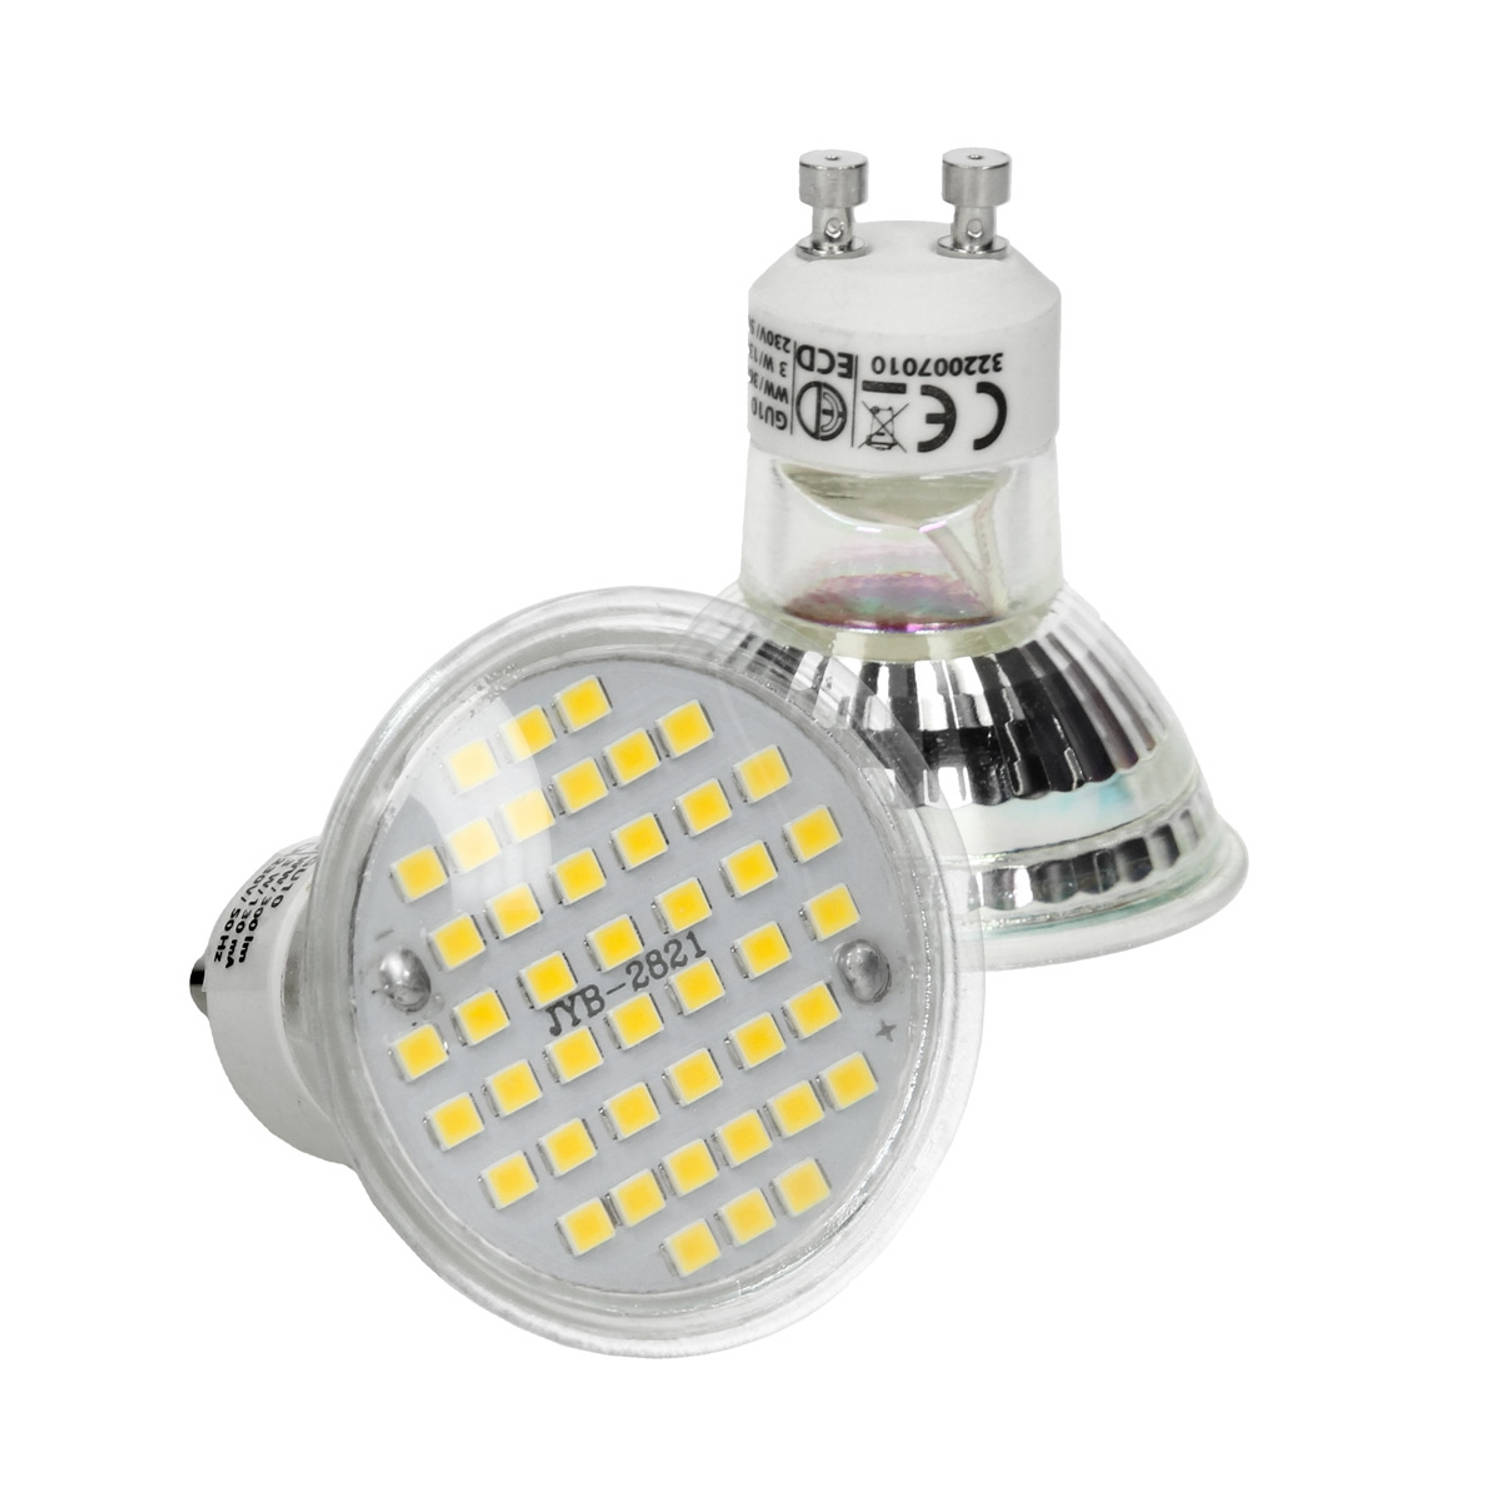 ECD Germany 5er Set LED-lamp GU10 44SMD Spot 3W - vervangen van 20W-lamp - gemaakt van glas - 251 lumen - warmwit 3000K